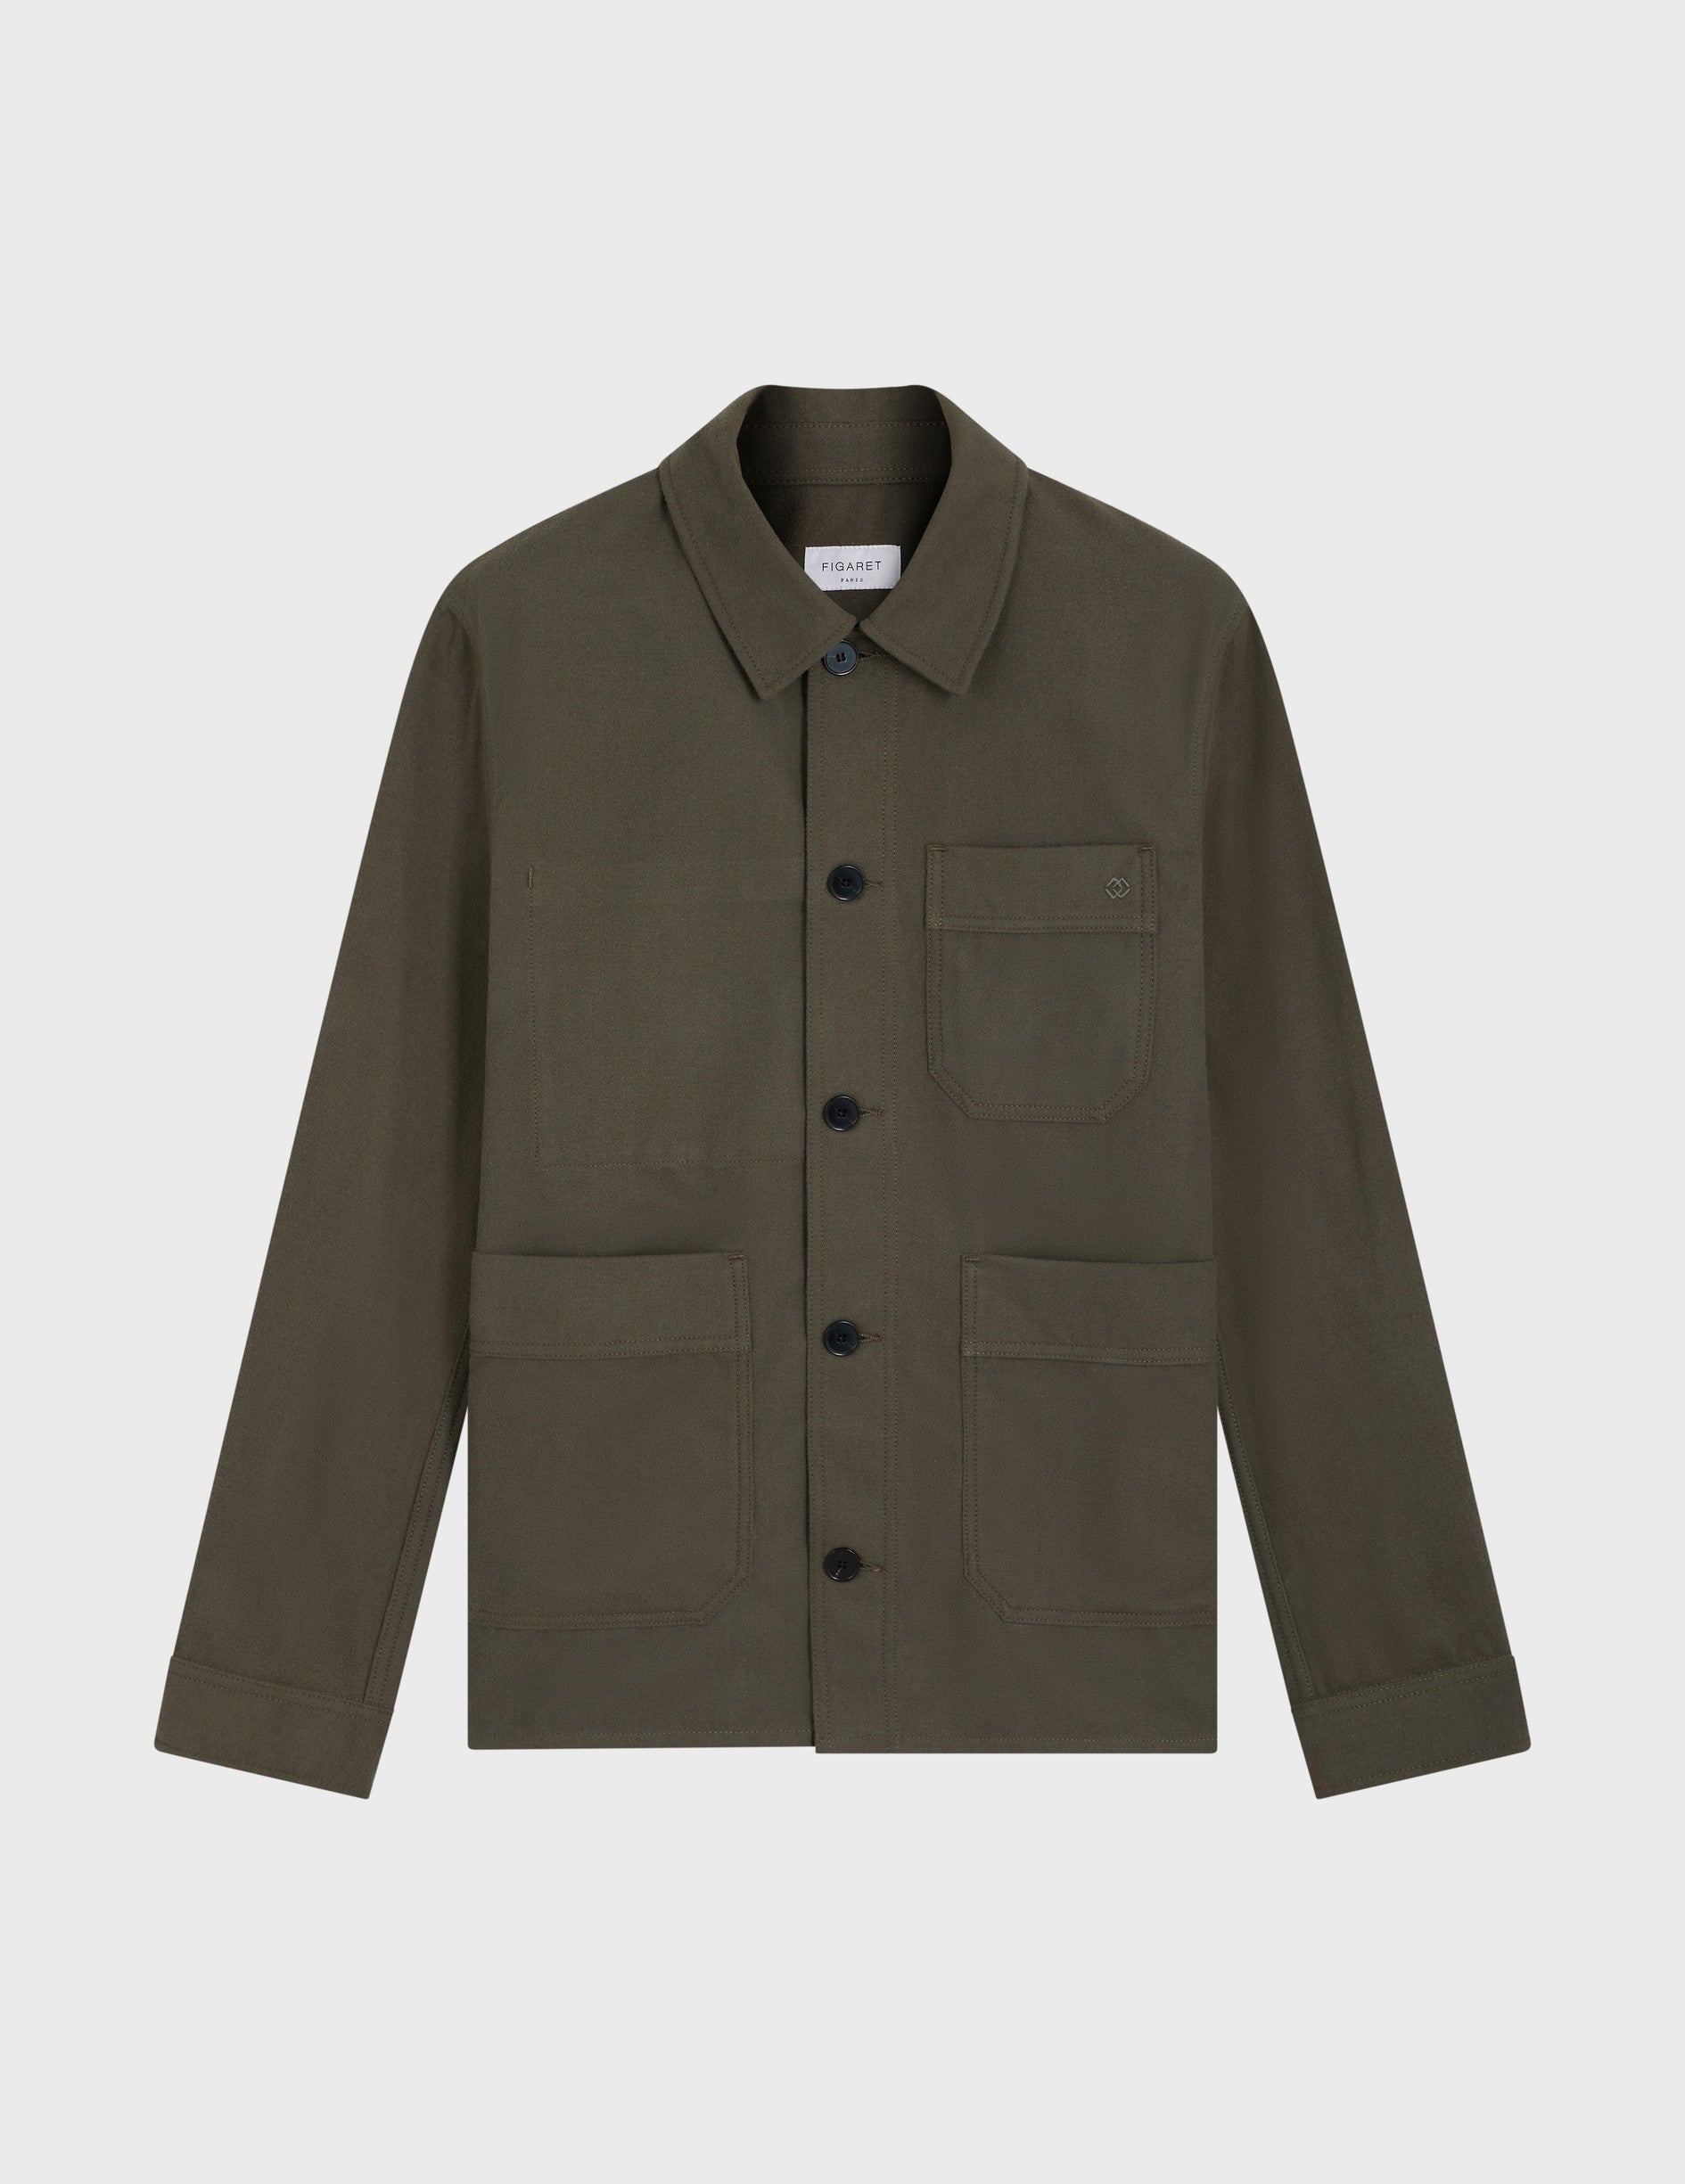 Khaki cotton flannel Badie jacket